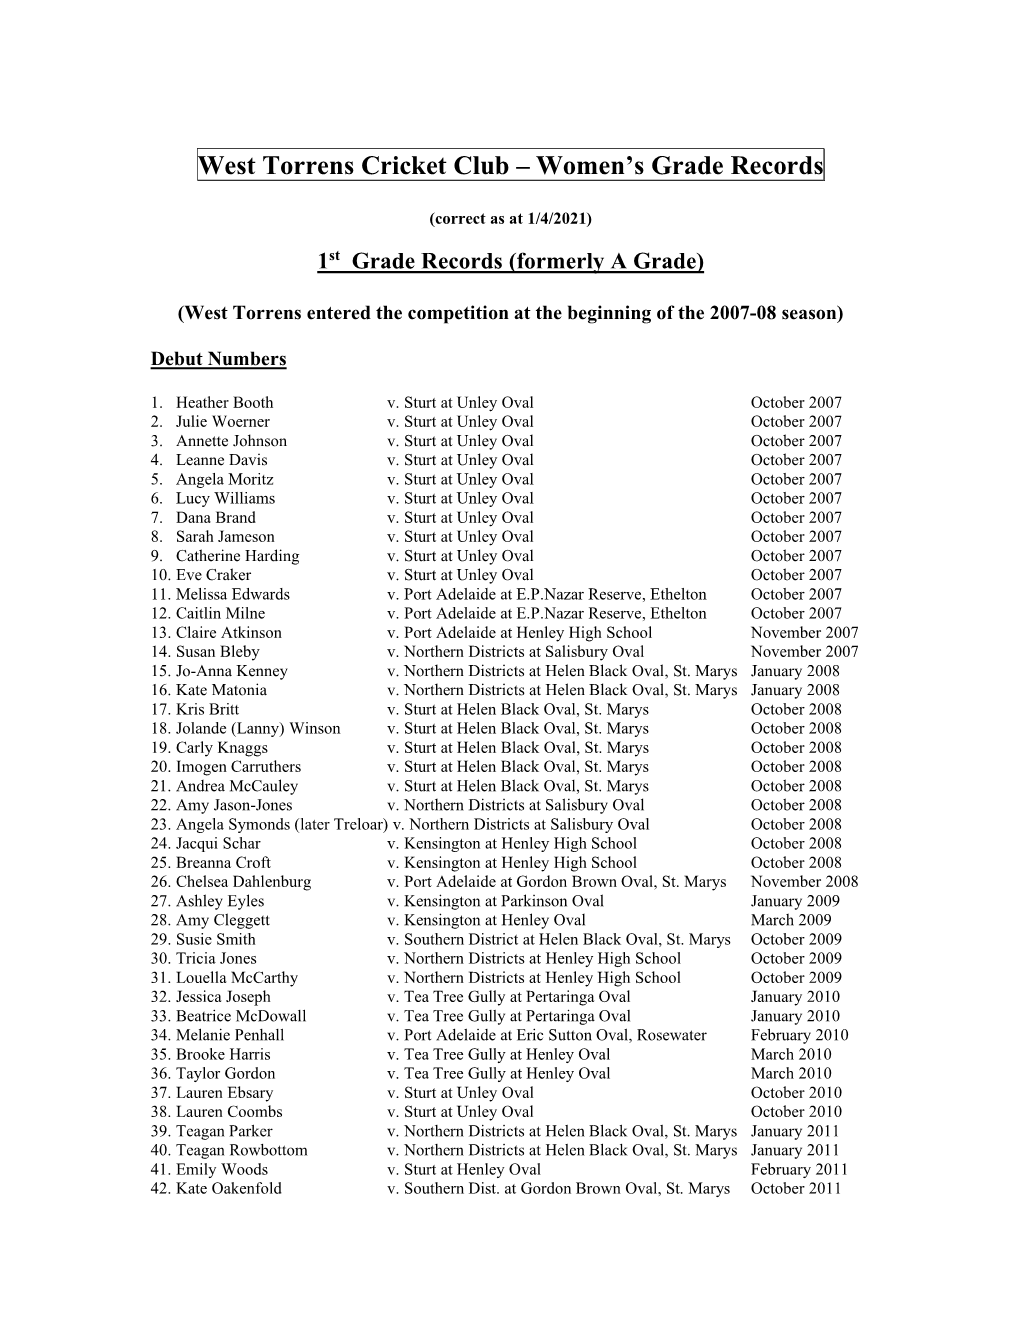 Women's Grade Records